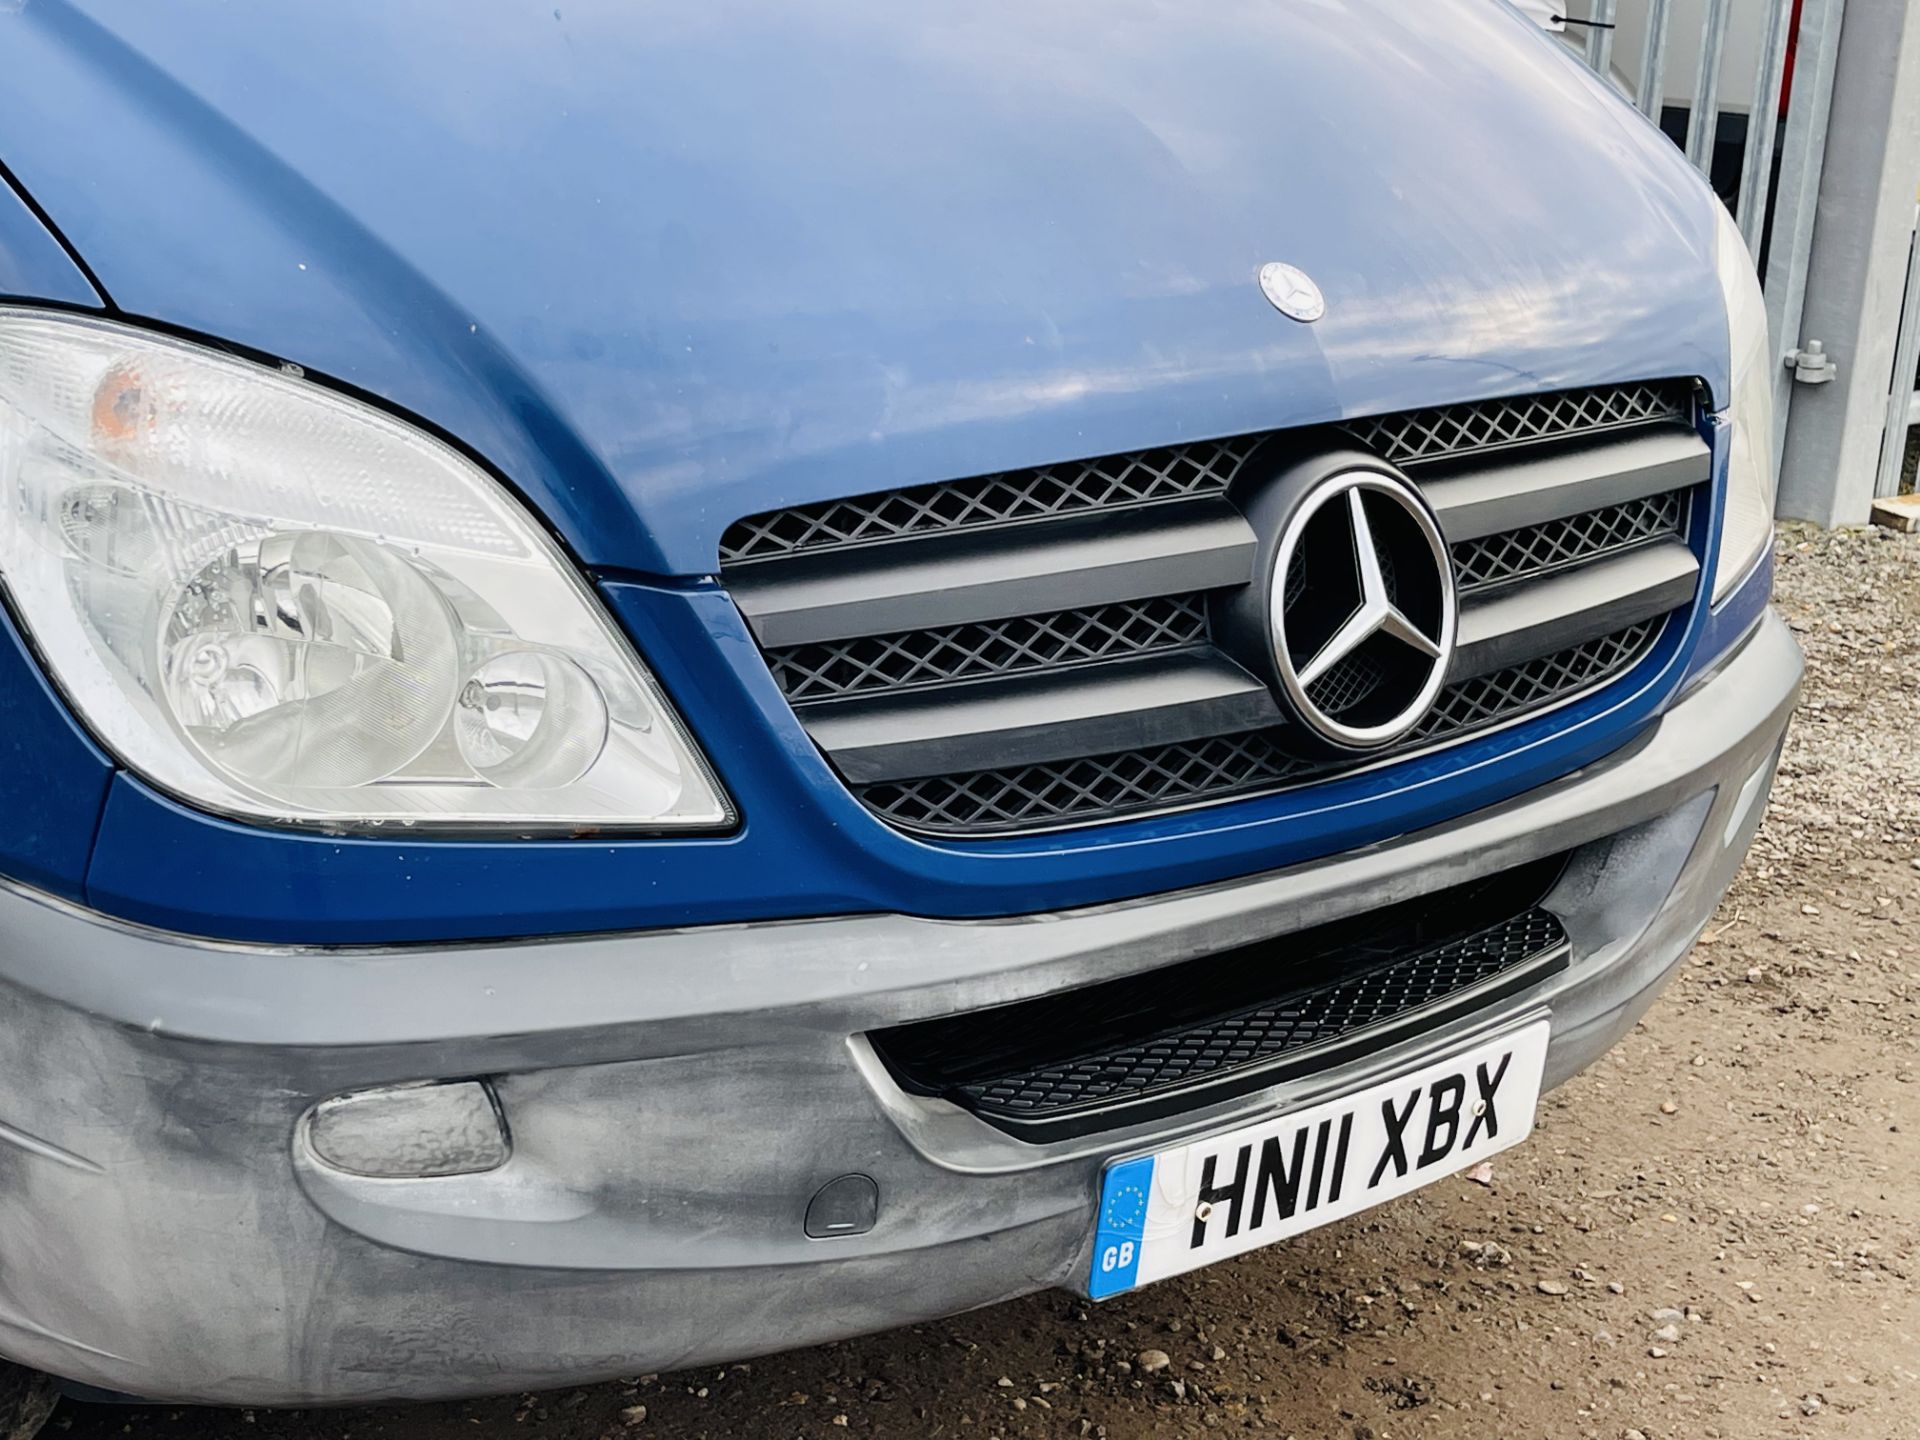 ** ON SALE **Mercedes Benz Sprinter 2.1 313 CDI L2 H3 2011 '11 Reg' - Panel Van - No Vat Save 20% - Image 16 of 20